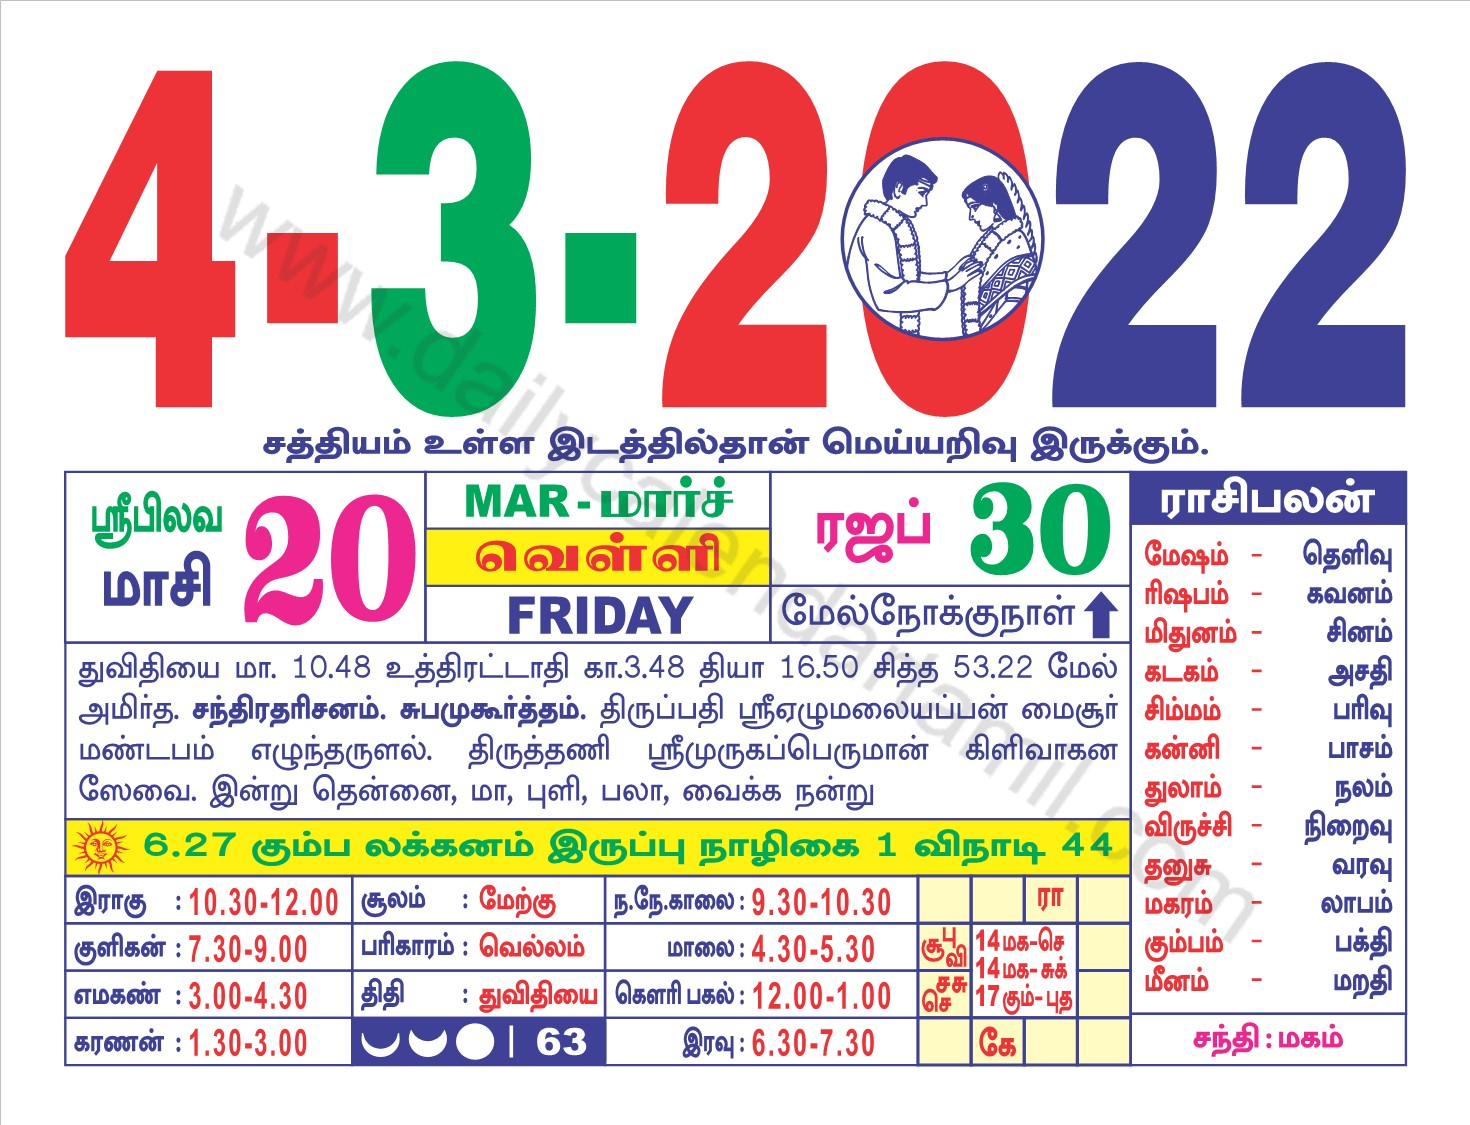 Catch Tamil Daily Calendar 2022 August